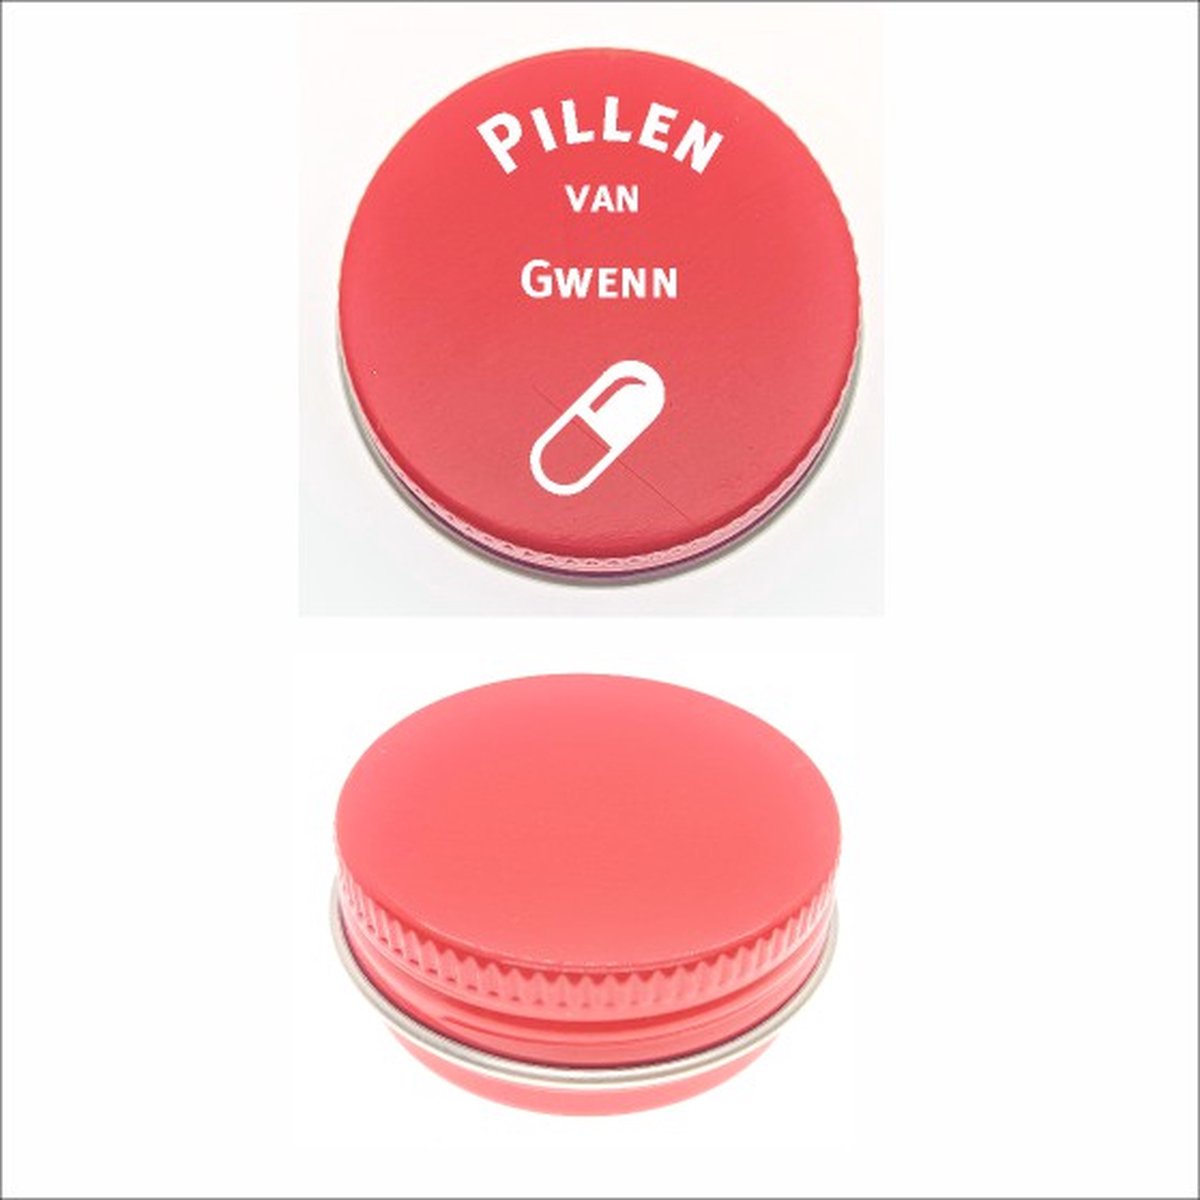 Pillen Blikje Met Naam Gravering - Gwenn